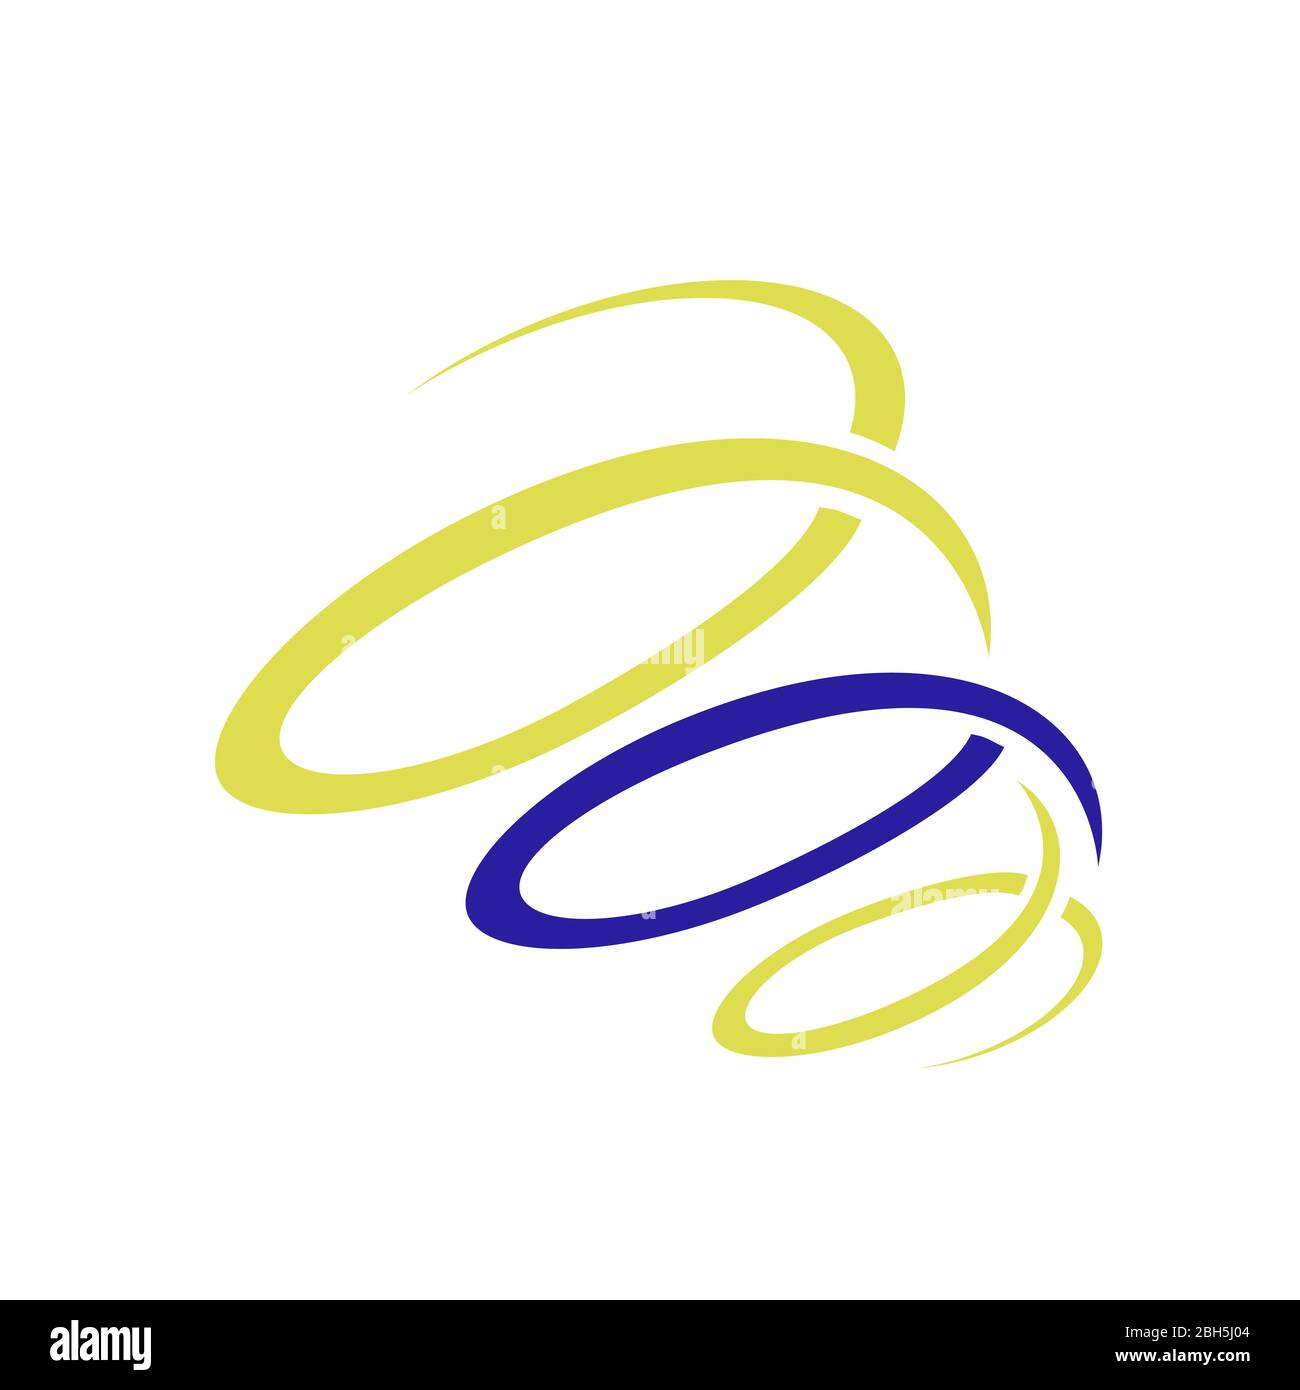 Moderne Stil abstrakt wirbelt Spiral Logo Design Vortex Kreis Vektor Grafik-Element Stock Vektor